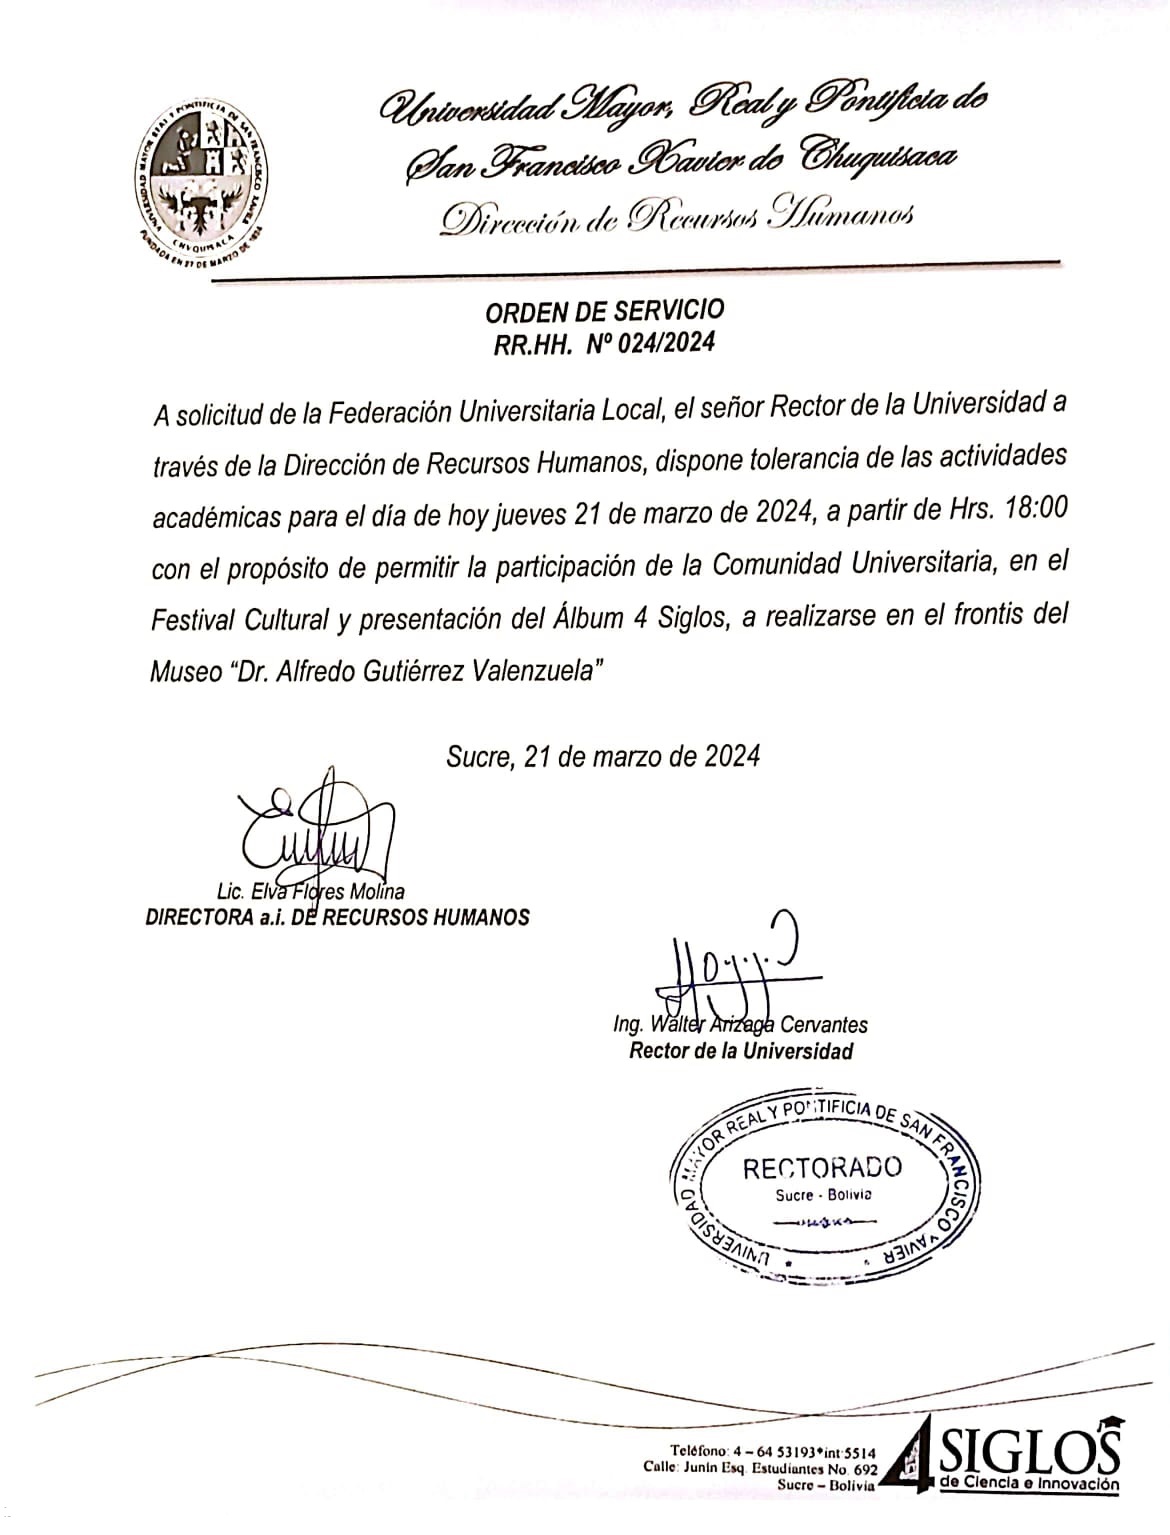 ORDEN DE SERVICIO RR.HH. Nº 024/2024, TOLERANCIA ACTIVIDADES ACADÉMICAS ASISTENCIA AL FESTIVAL CULTURAL.